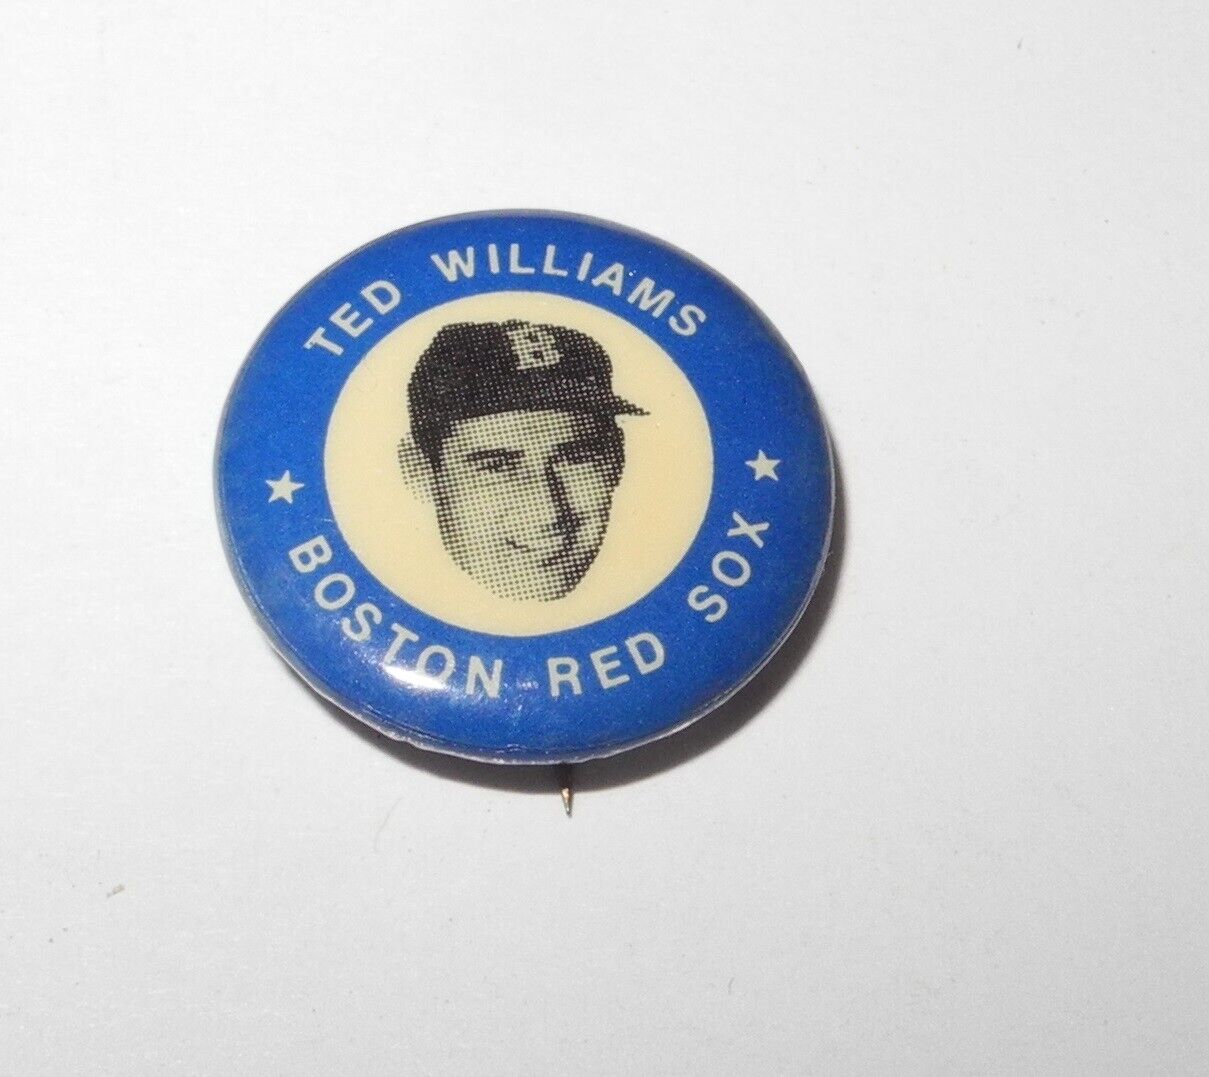 VINTAGE TED WILLIAMS RED SOX SOUVENIR STADIUM ADVERTISING PIN BUTTON PINBACK